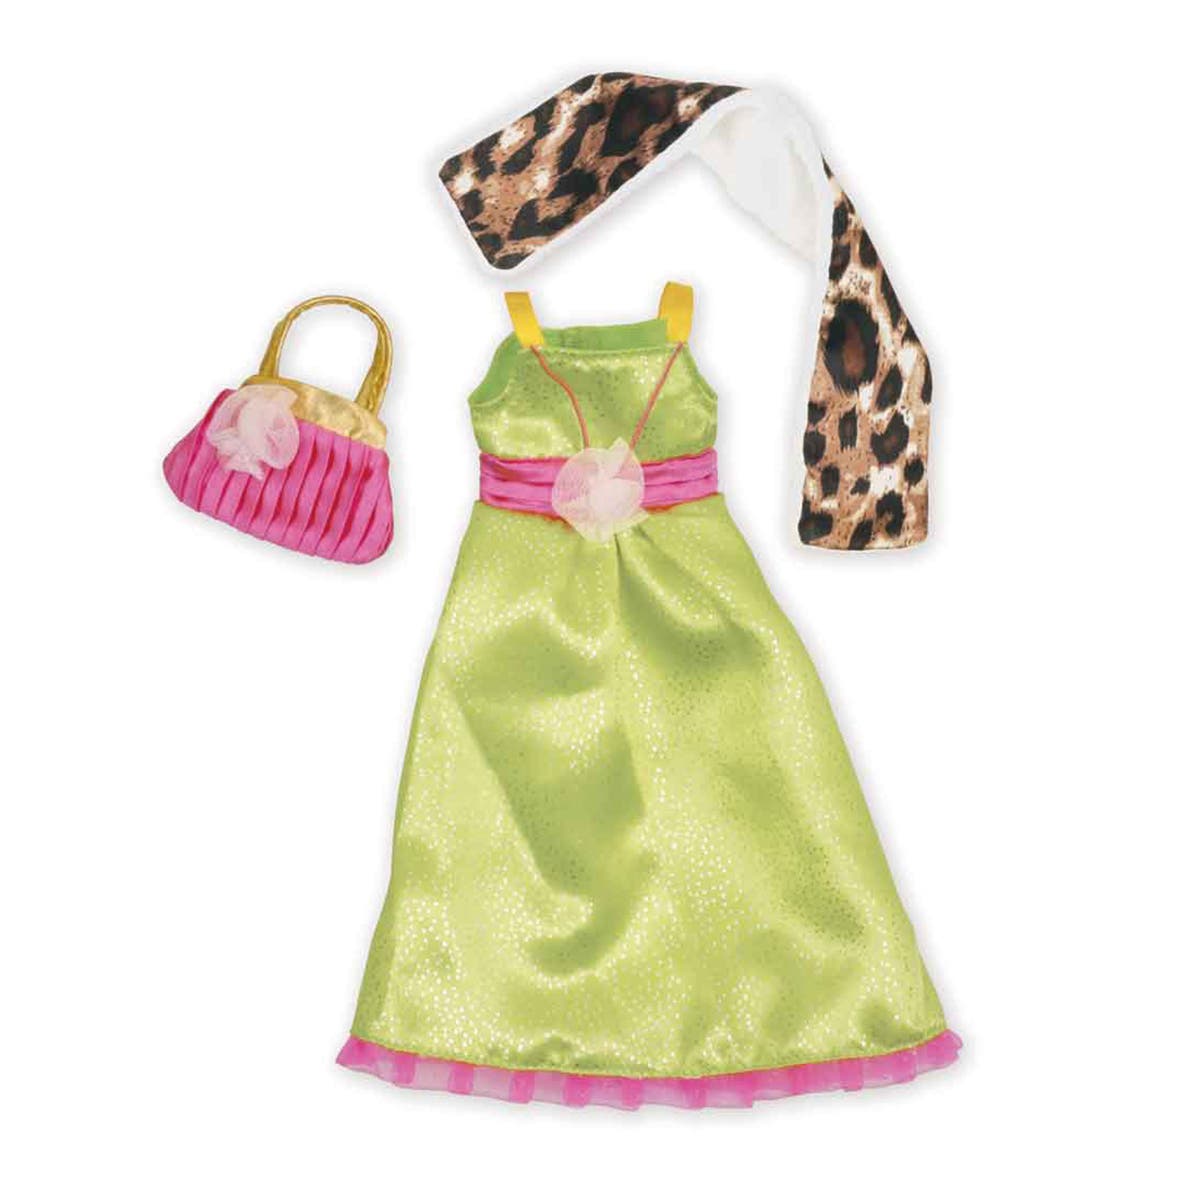 Manhattan Toy Company Groovy Girls Glamtastic Glitz Dress Set